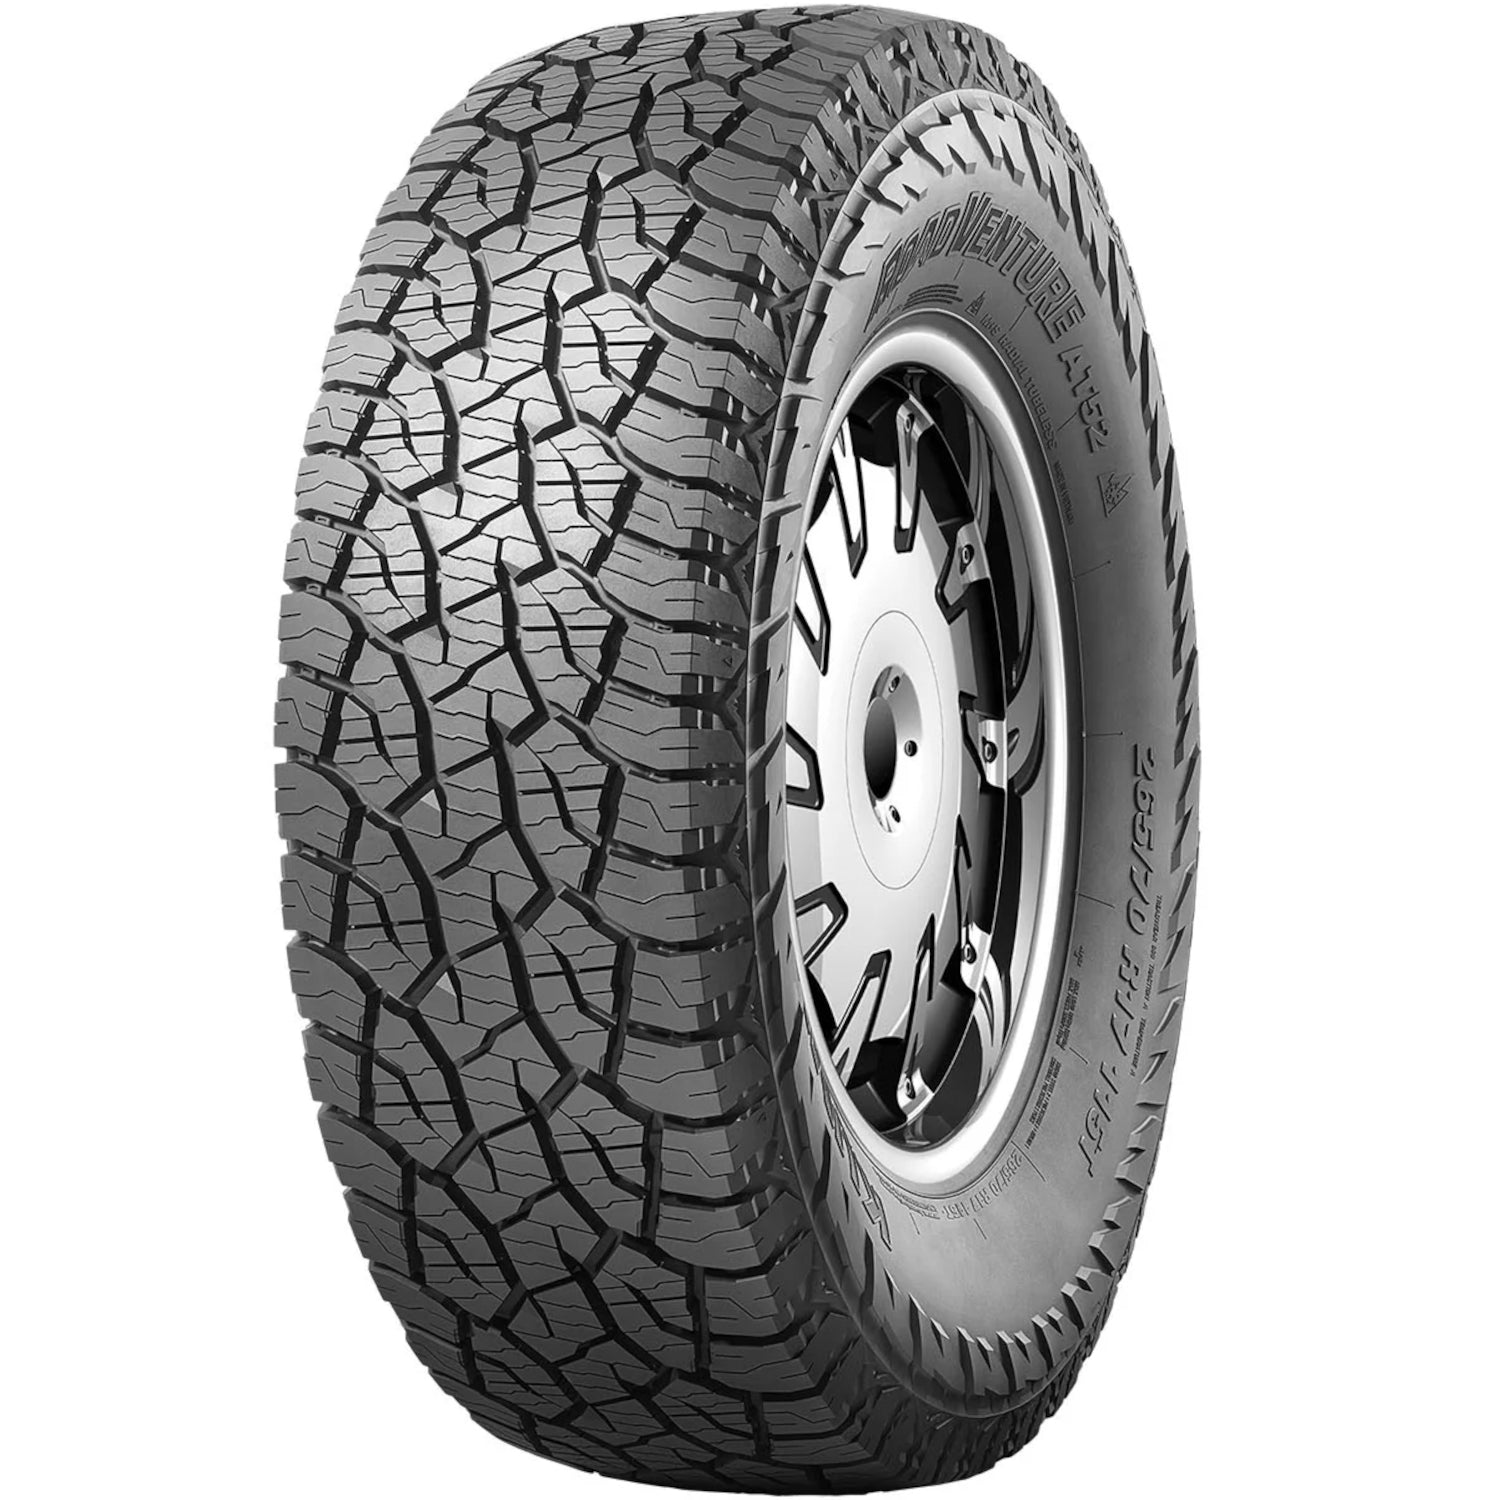 KUMHO ROAD VENTURE AT52 LT275/55R20 (31.9X10.8R 20) Tires